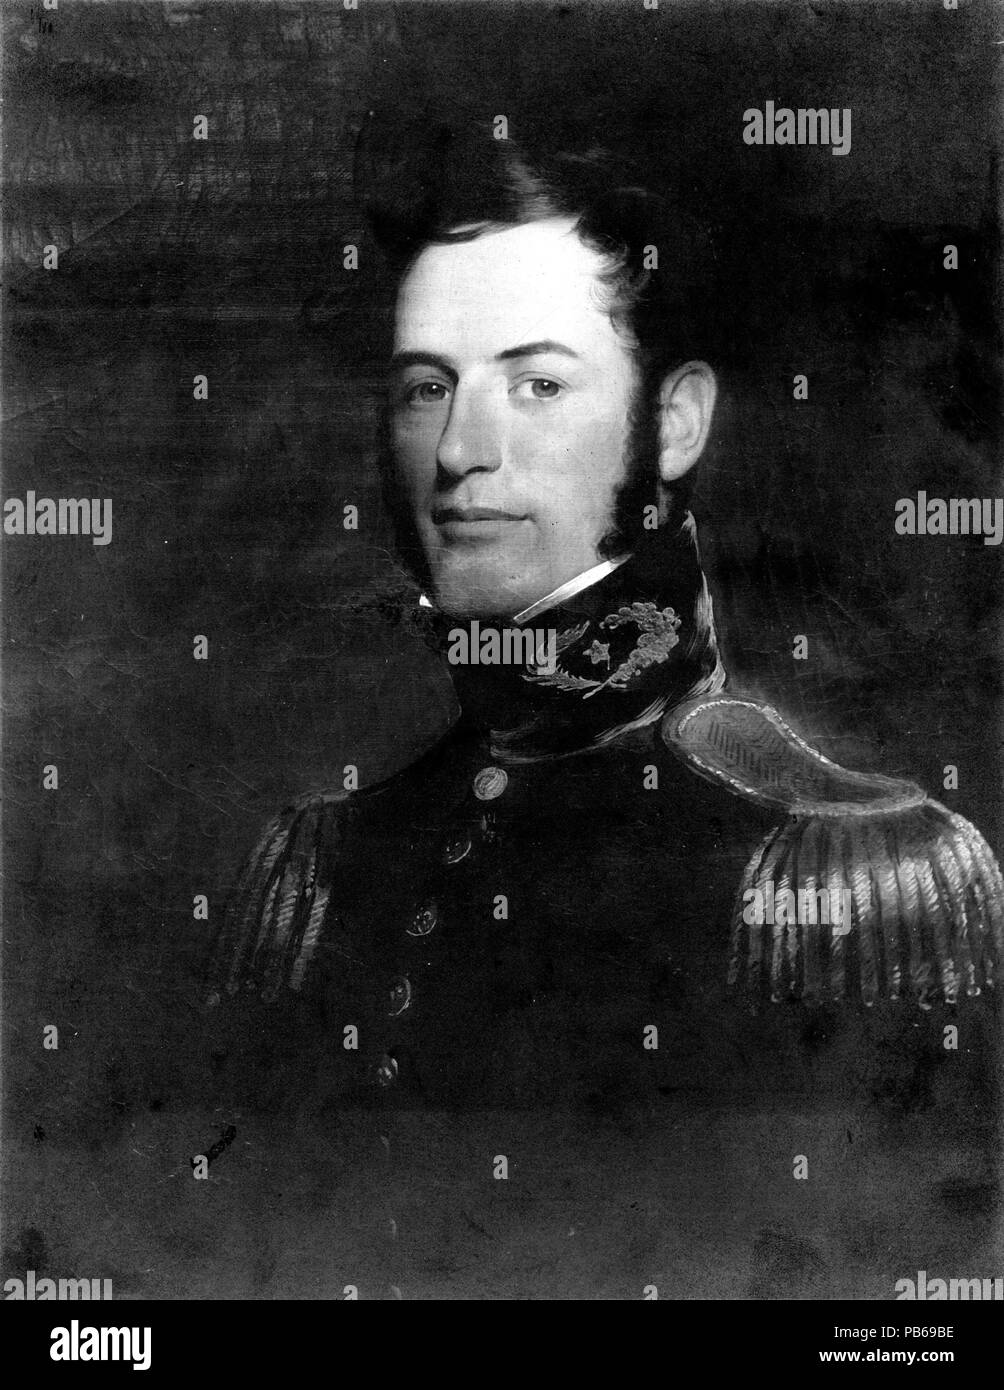 1264 Robert E. Lee (Lieutenant, U.S. Army Corps of Engineers) Stock Photo